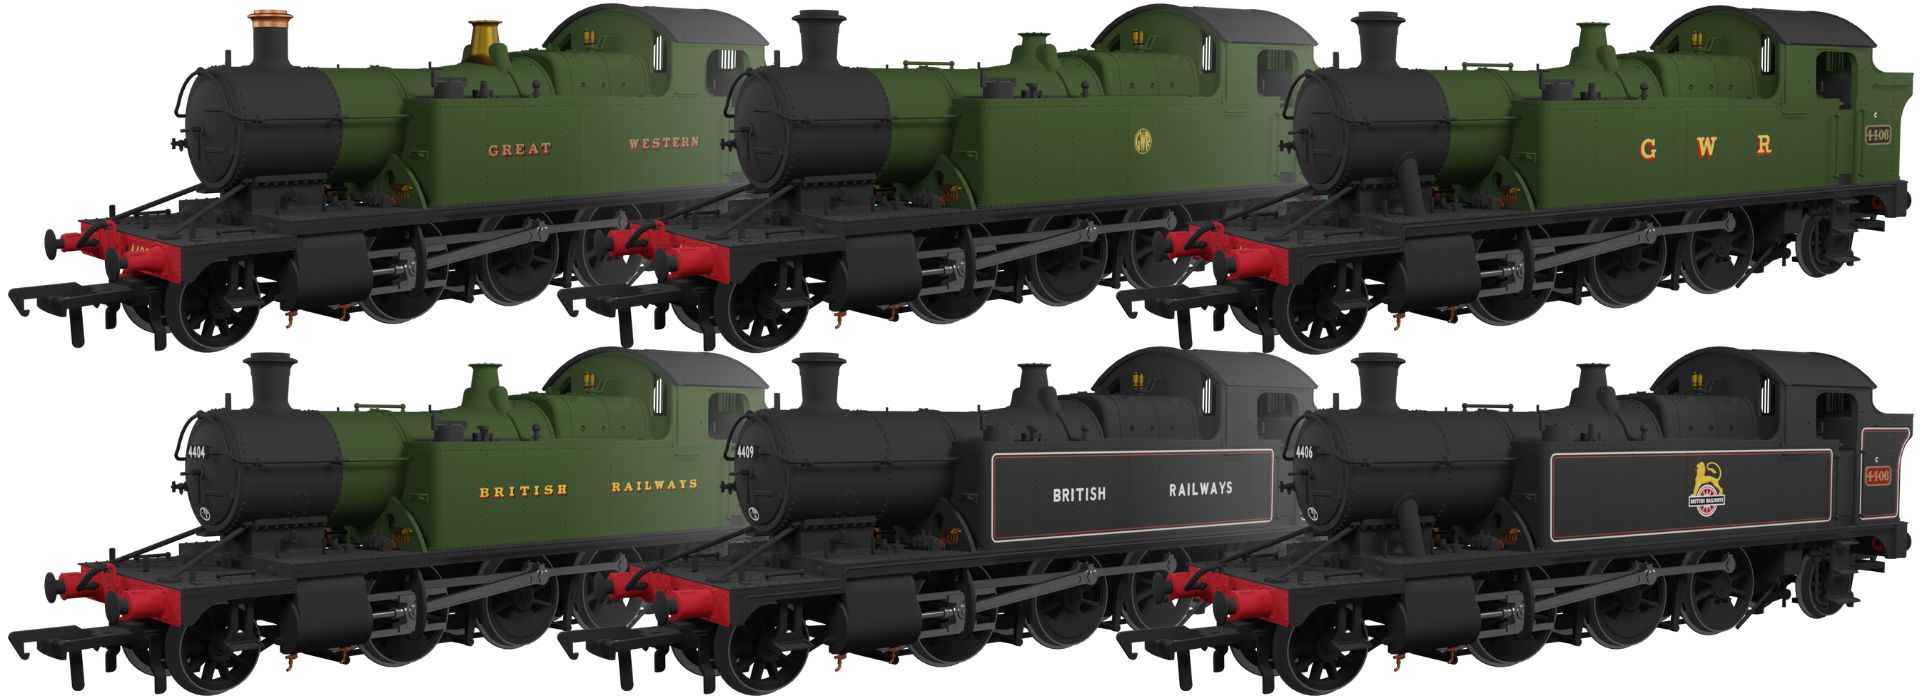 Rapido Trains UK OO Gauge (1:76 Scale) 2-6-2T Class 44xx Small Prairie GWR